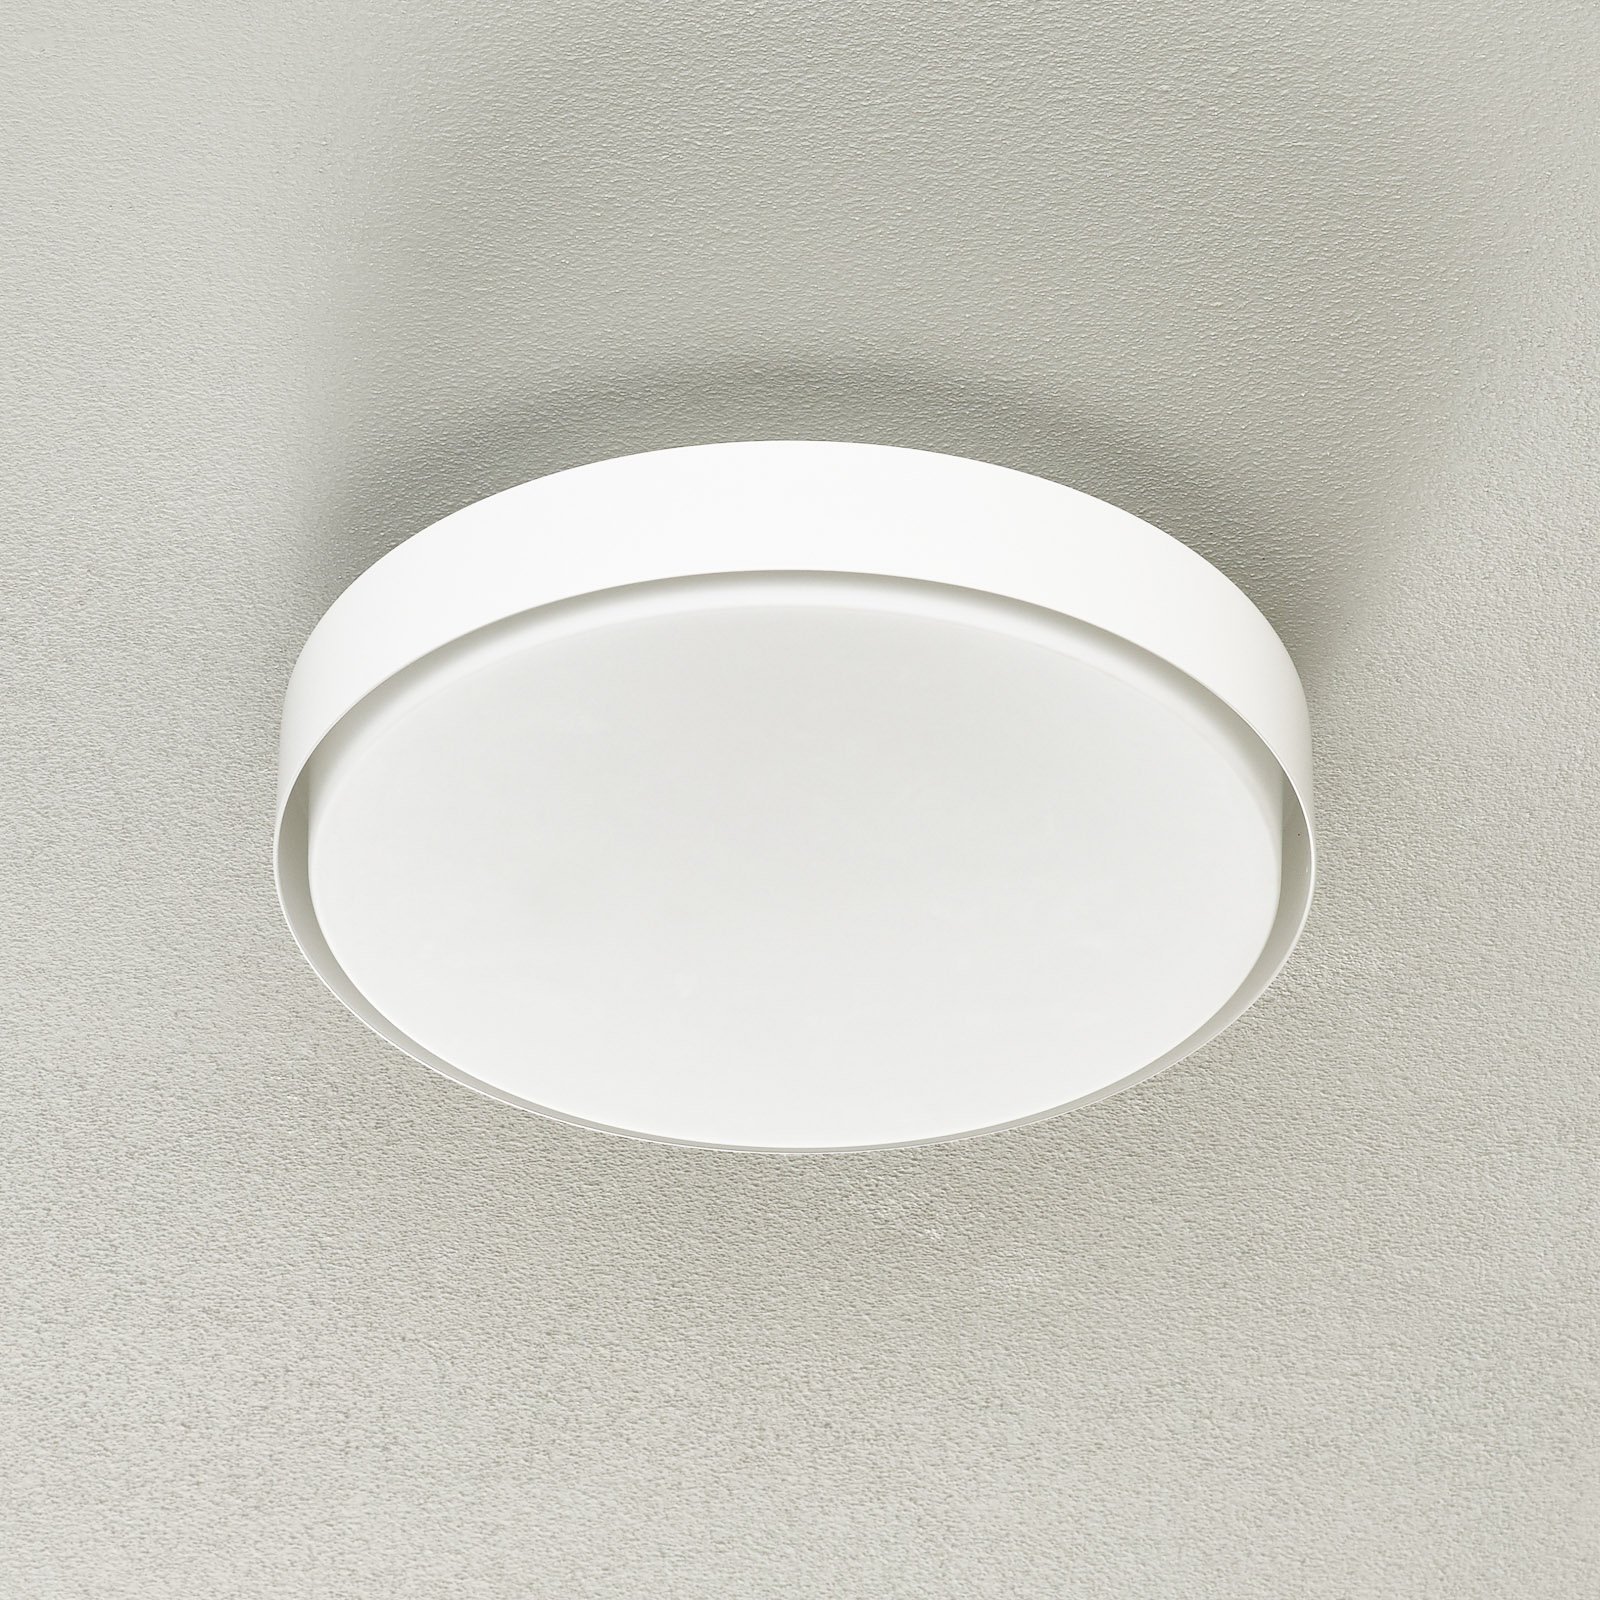 BEGA 34278 LED-taklampa, vit, Ø 36 cm, DALI